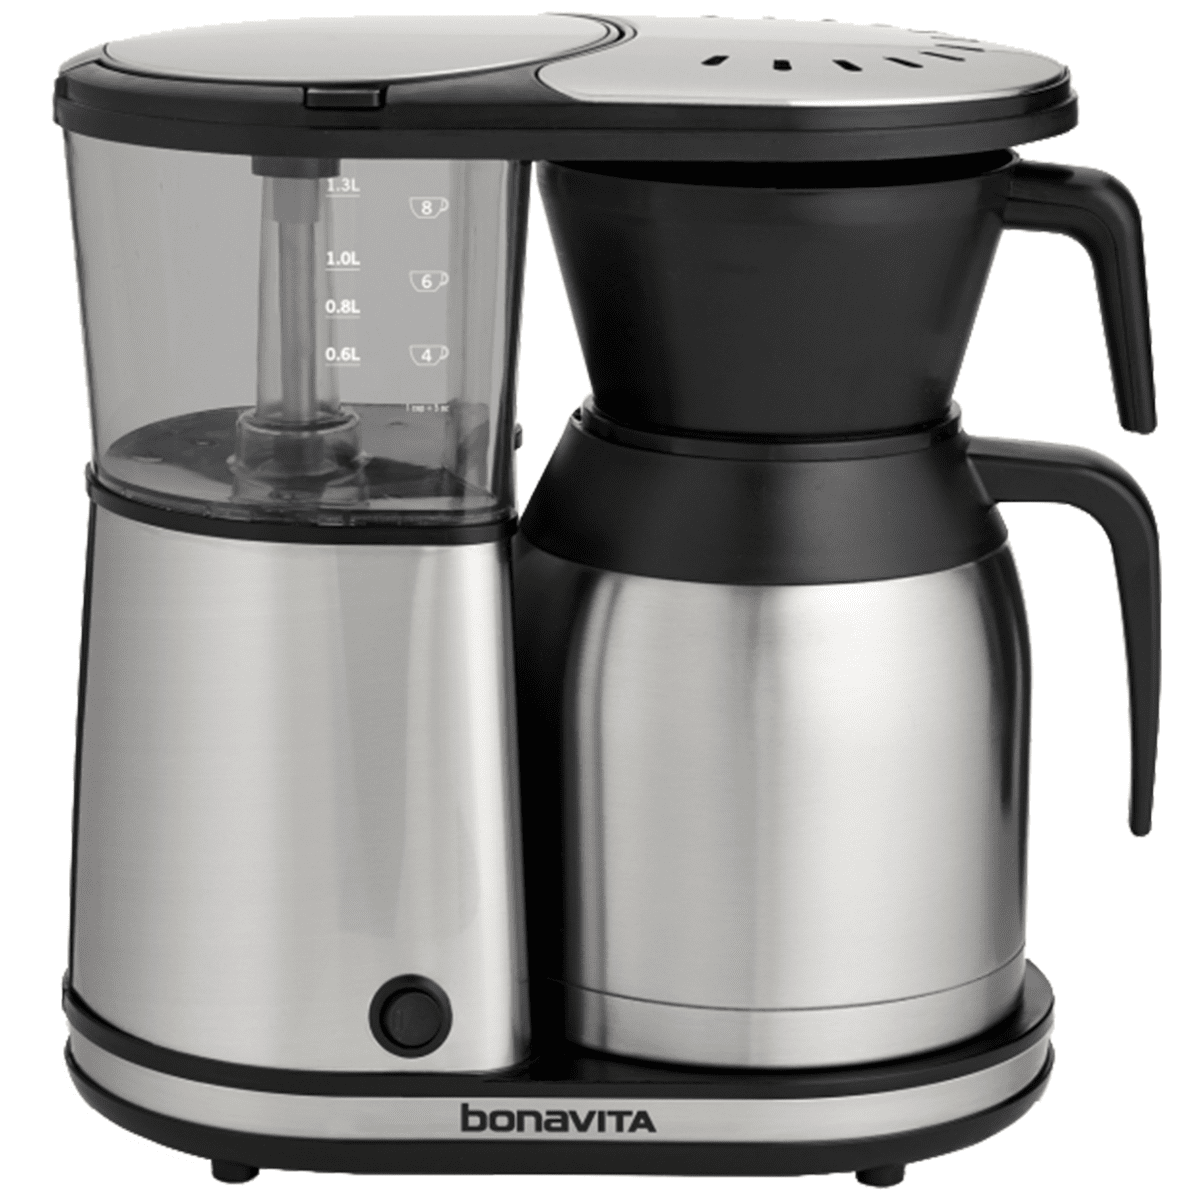 Bonavita 8-cup Stainless Steel Carafe Coffee Maker (BV1900TS)